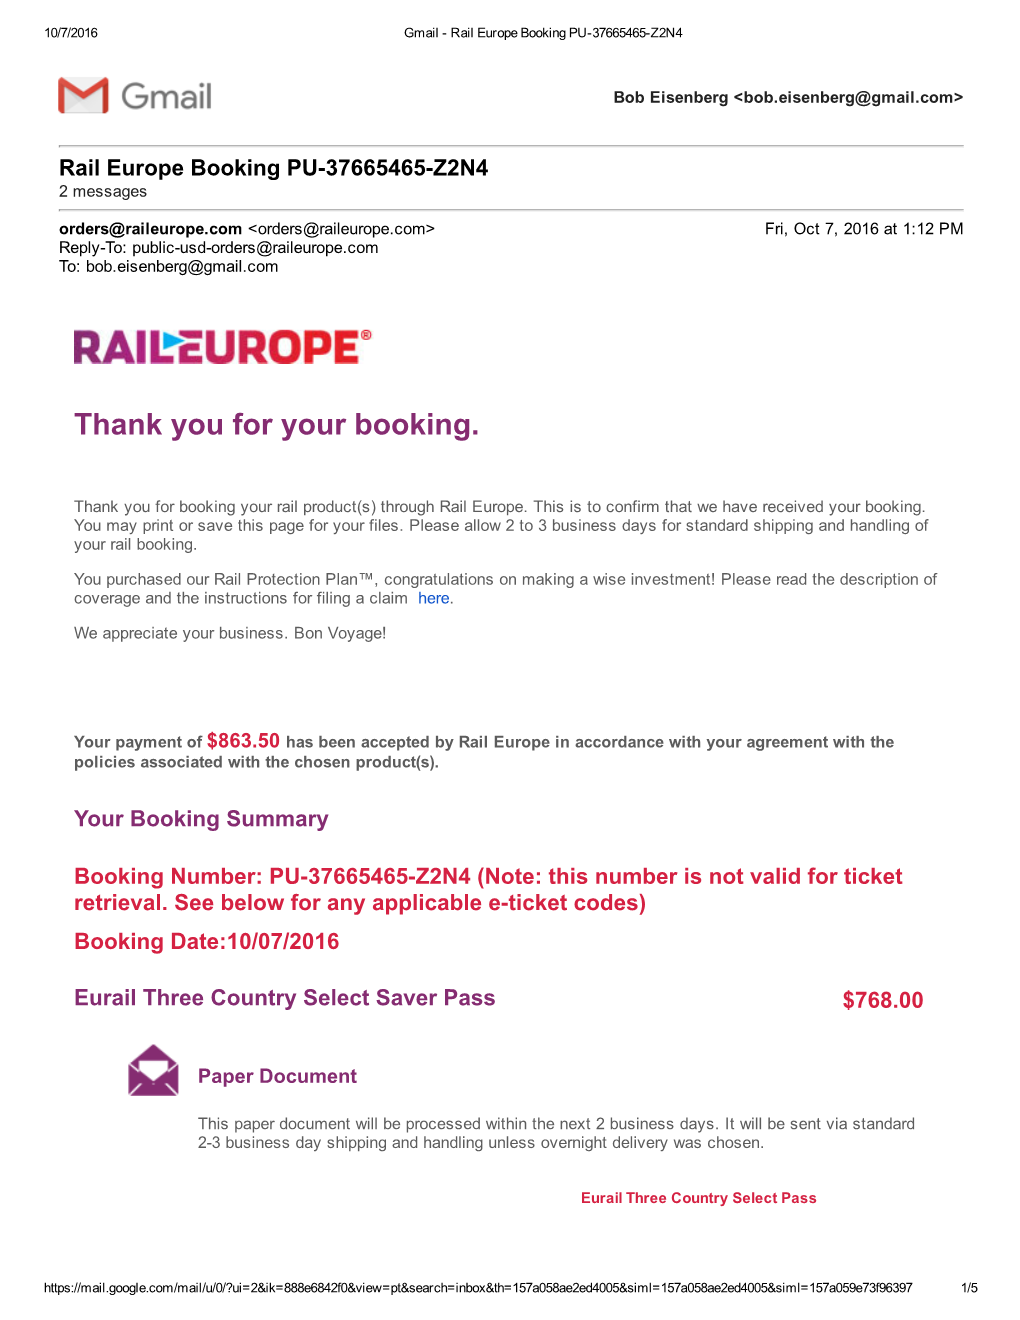 Gmail ­ Rail Europe Booking PU­37665465­Z2N4